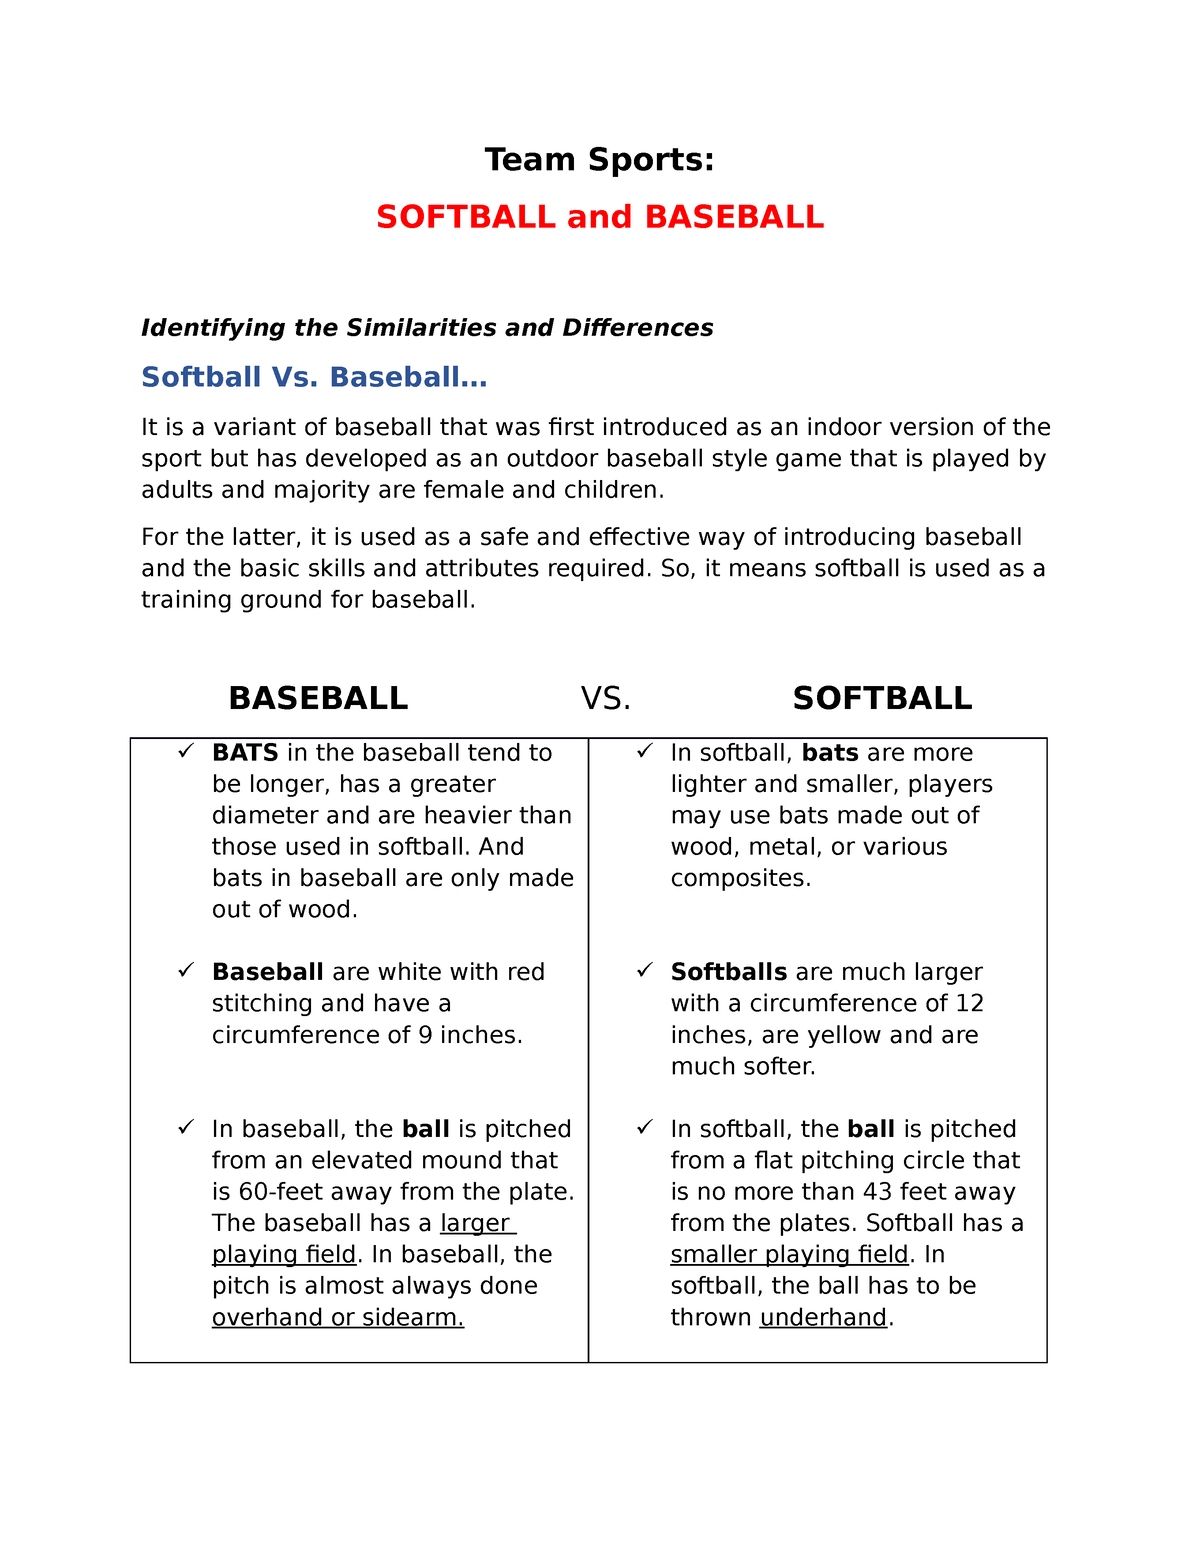 Team Sports Softball Baseball - Team Sports: SOFTBALL and BASEBALL ...